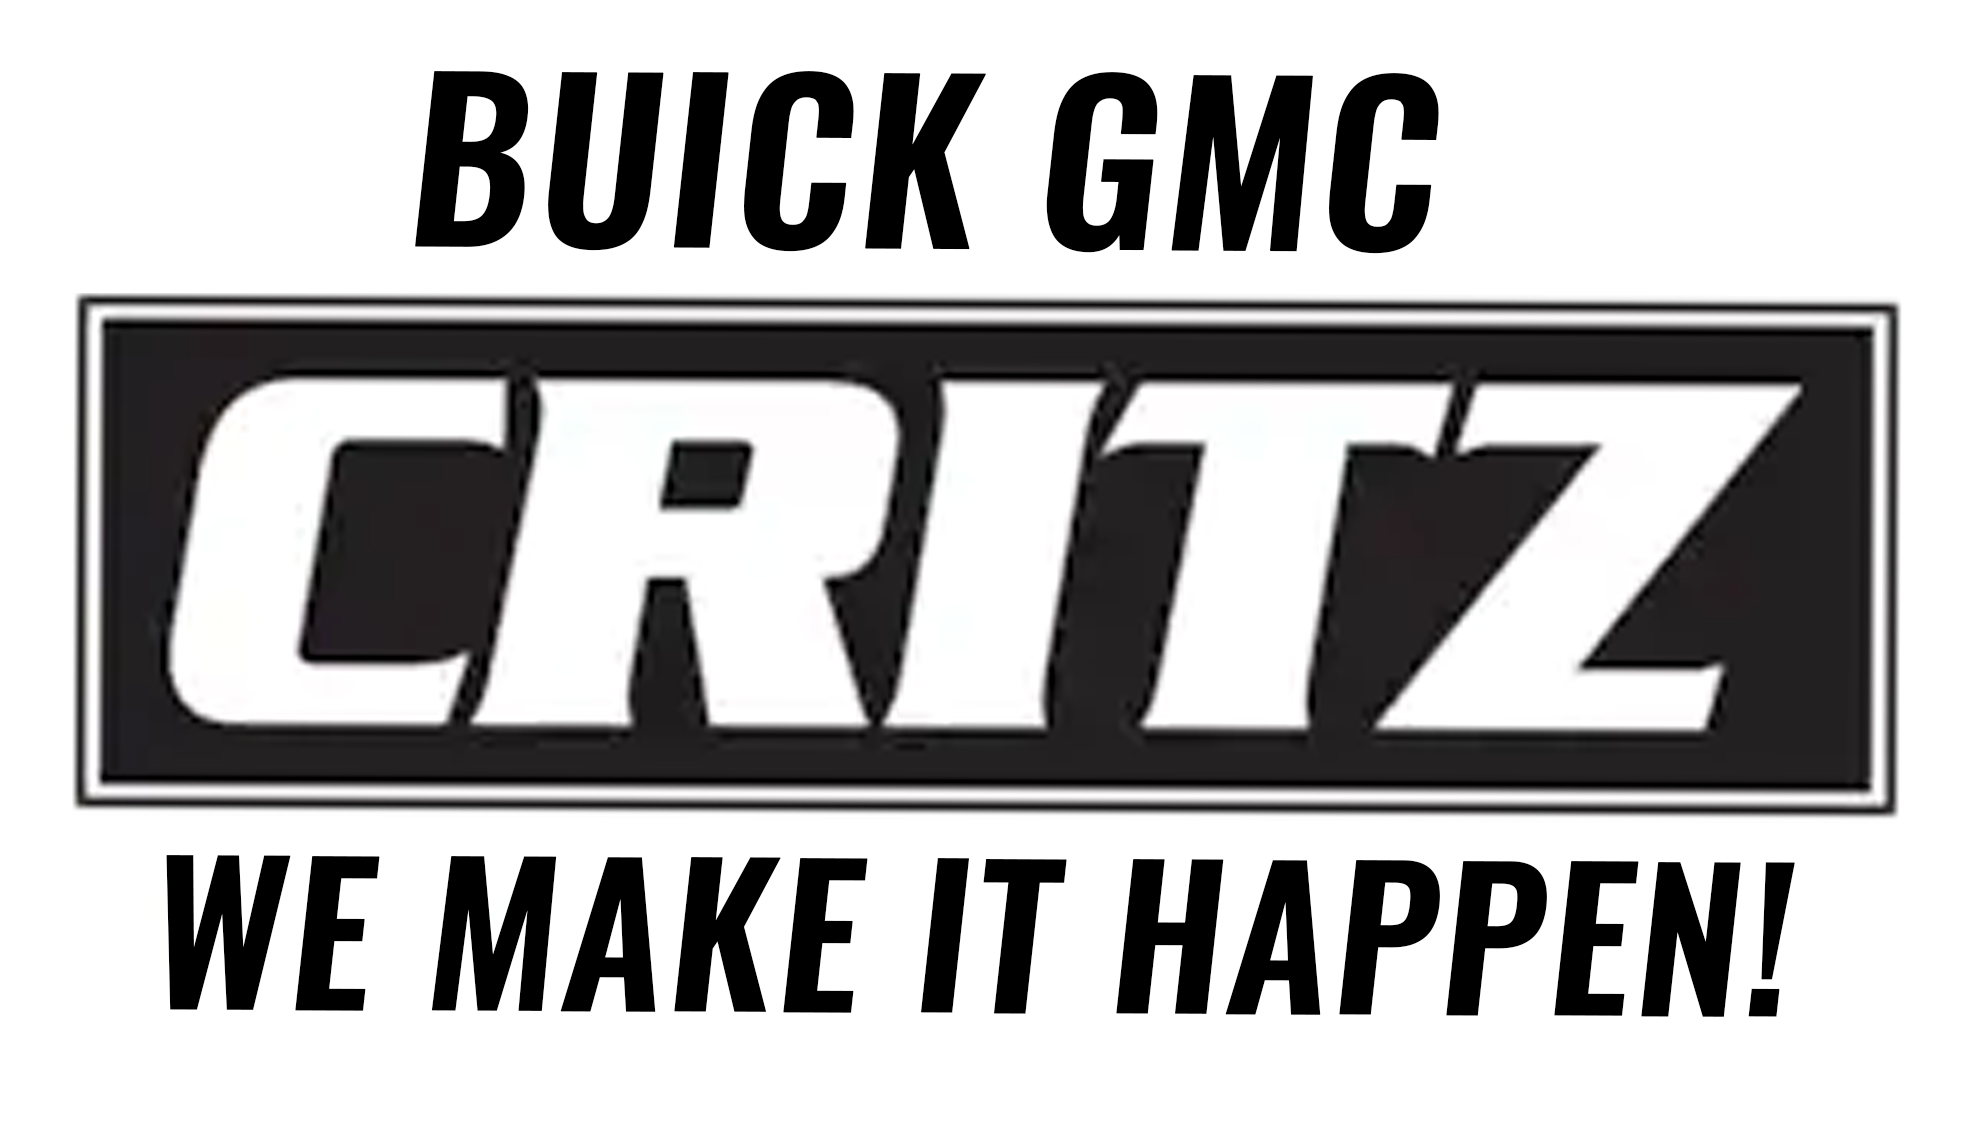 Critz Buick GMC Blog